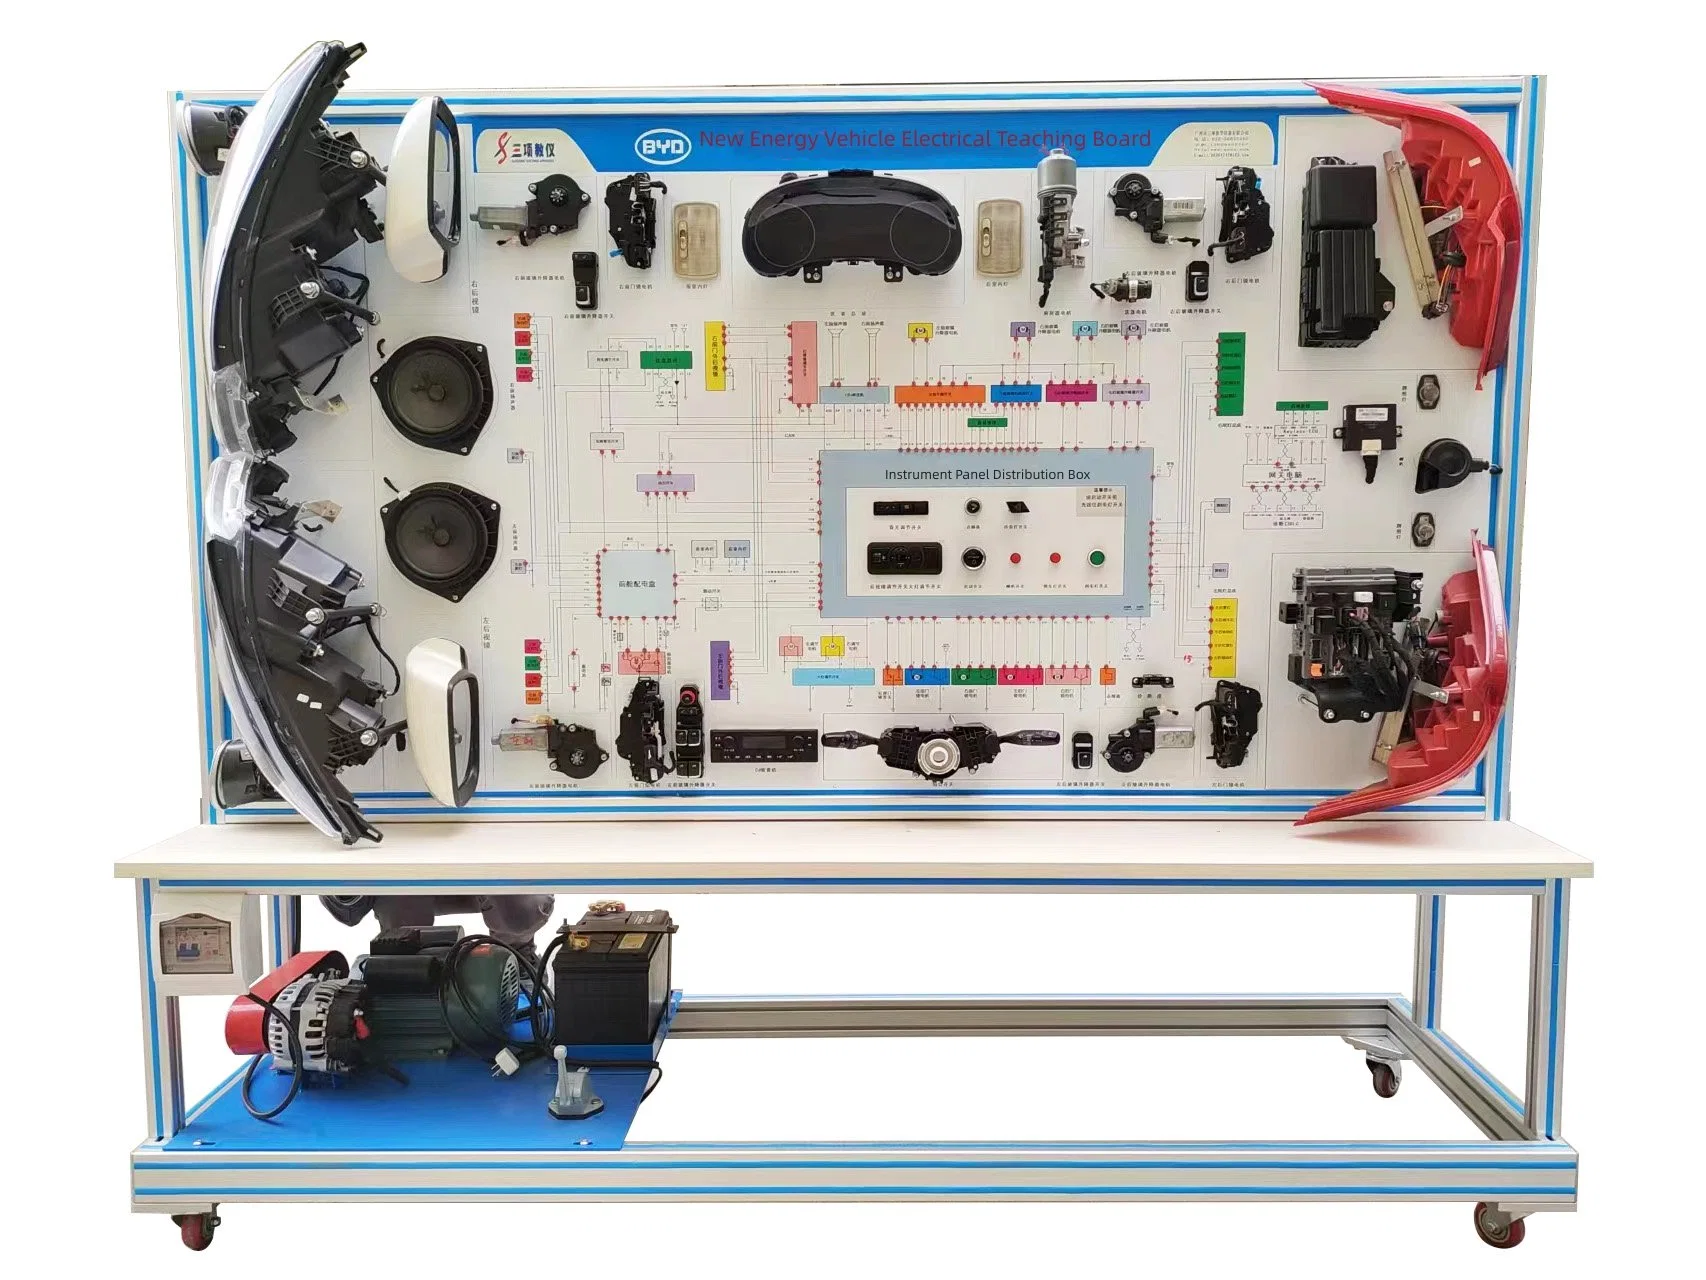 Carrera Auto Electrical Schematic Board Educational Equipment for College